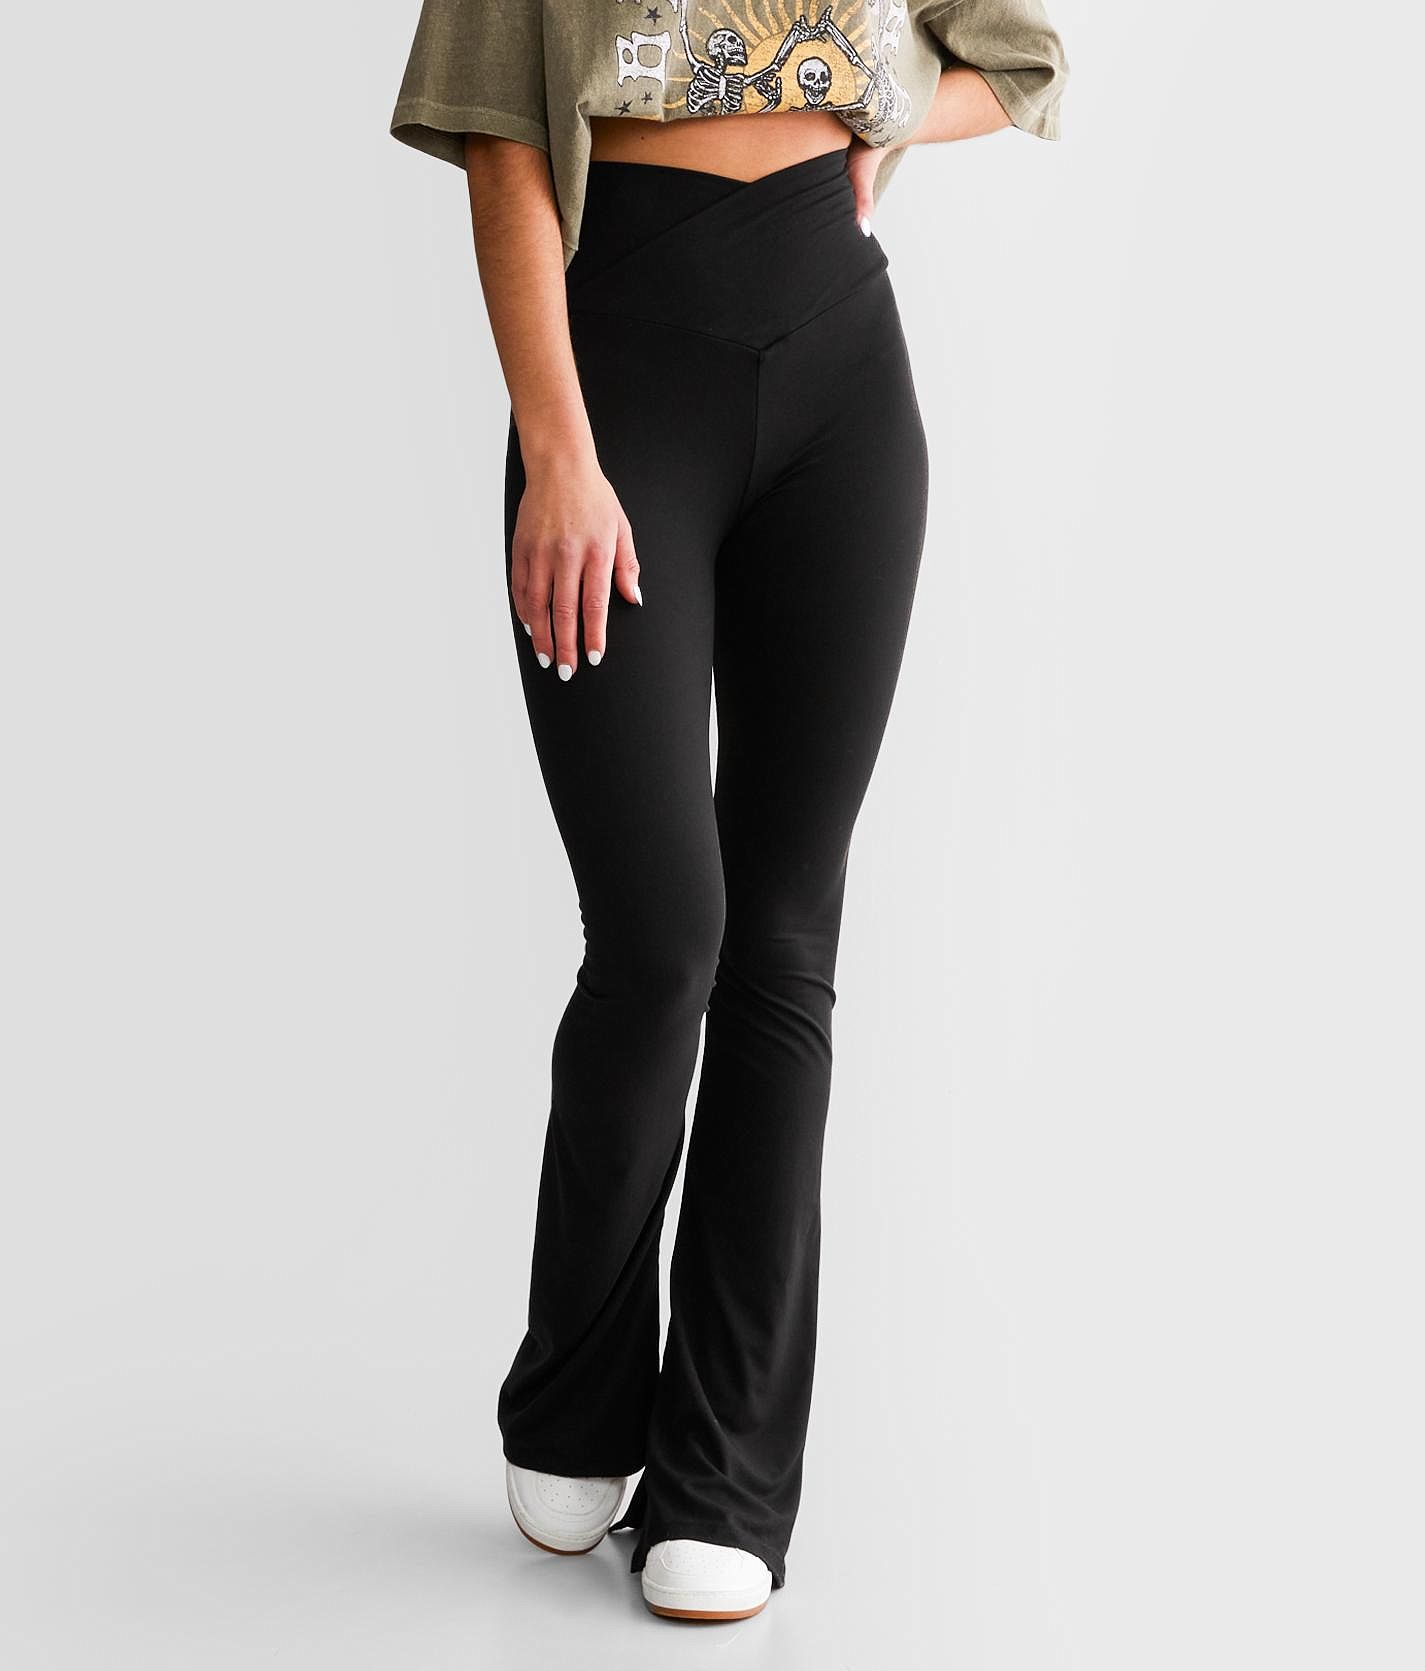 Dex 2222240D pants, comfortable black leggings and flared legs